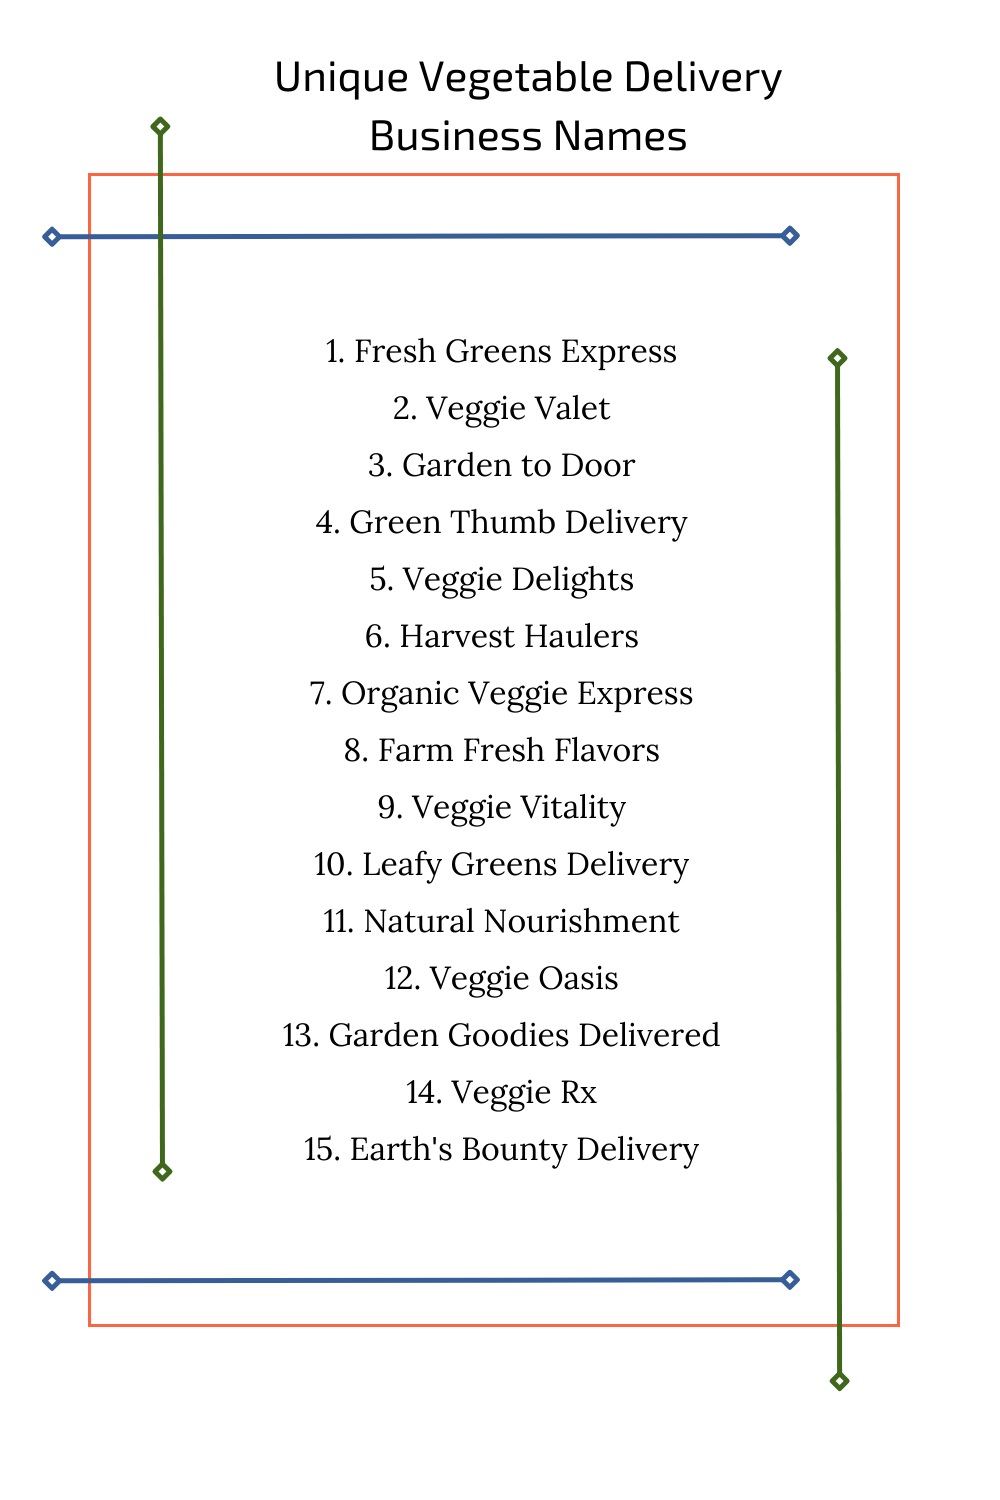 Unique Vegetable Delivery Business Names